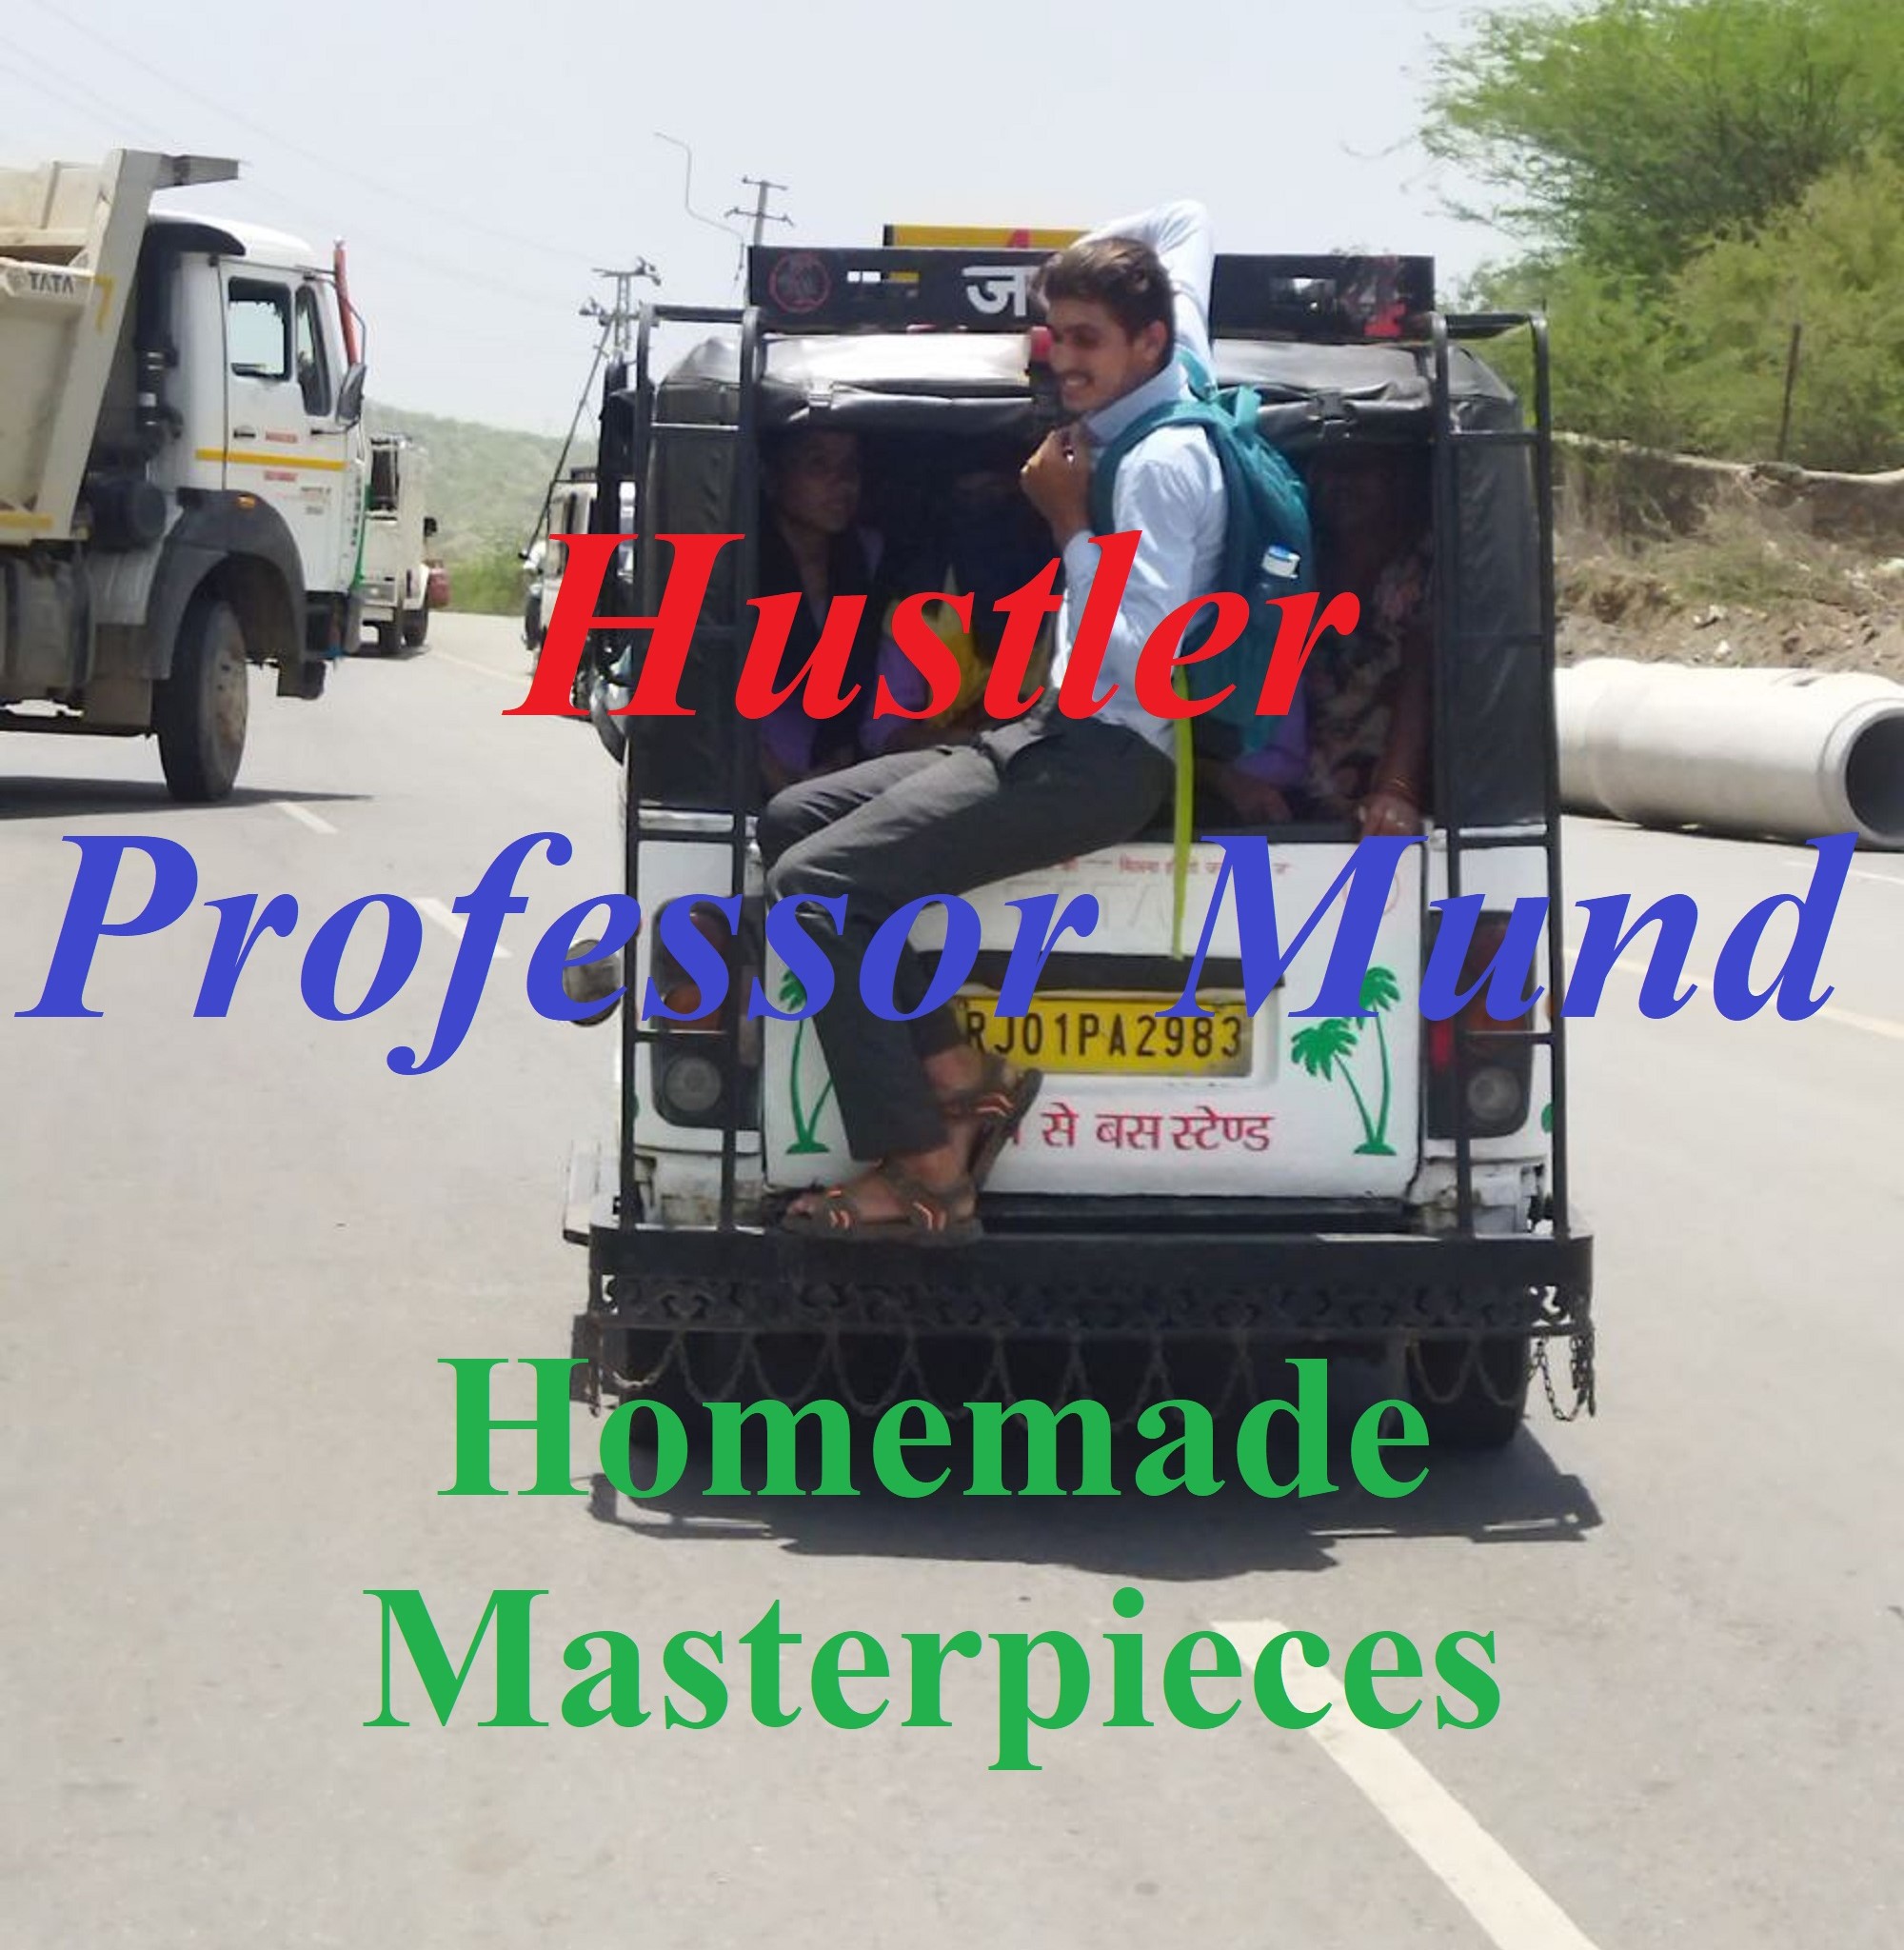 Hustler Professor Mund